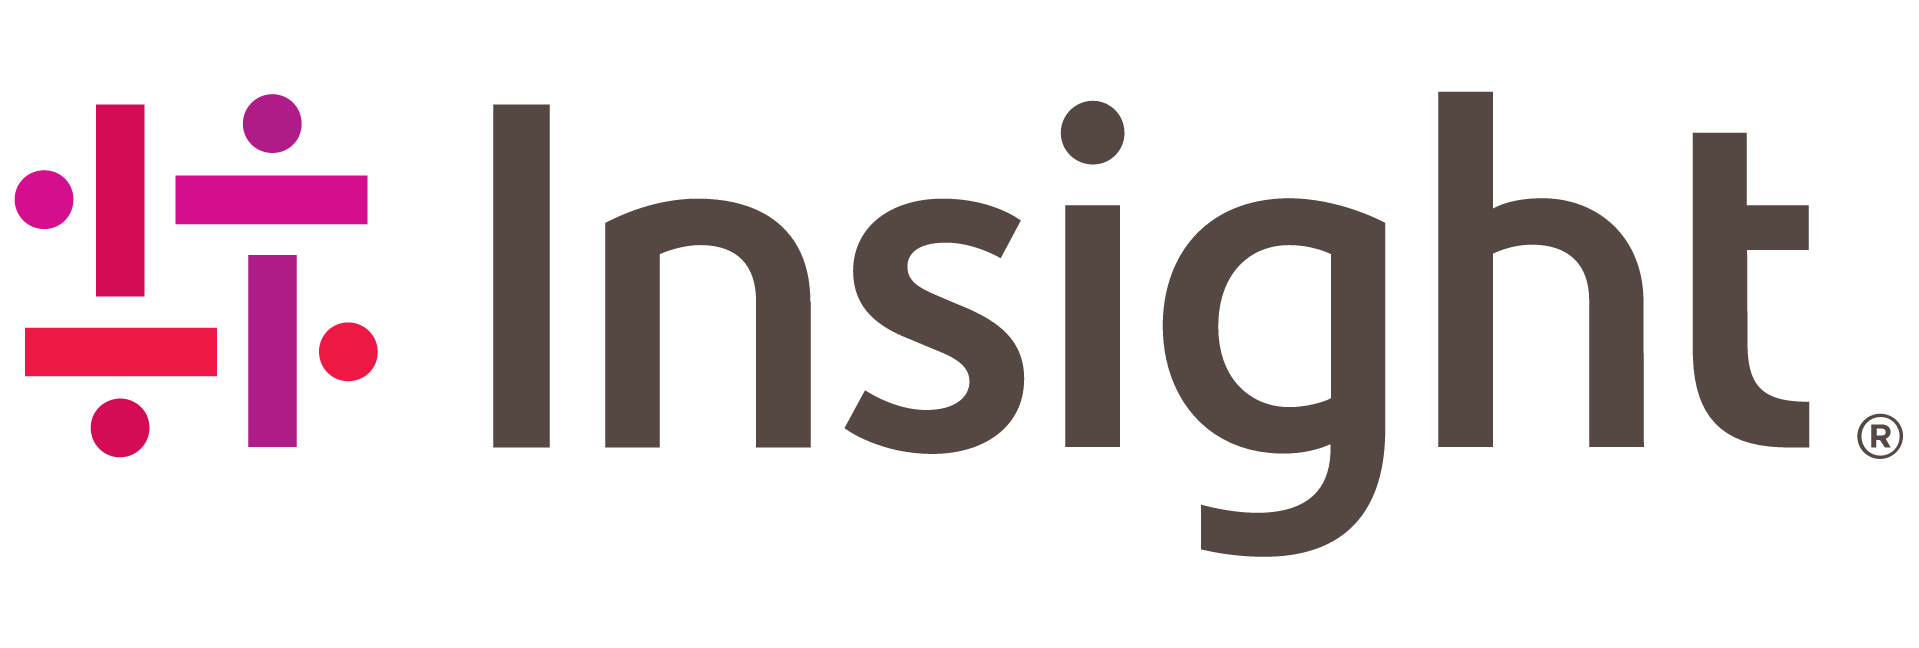 Insight Enterprises Inc